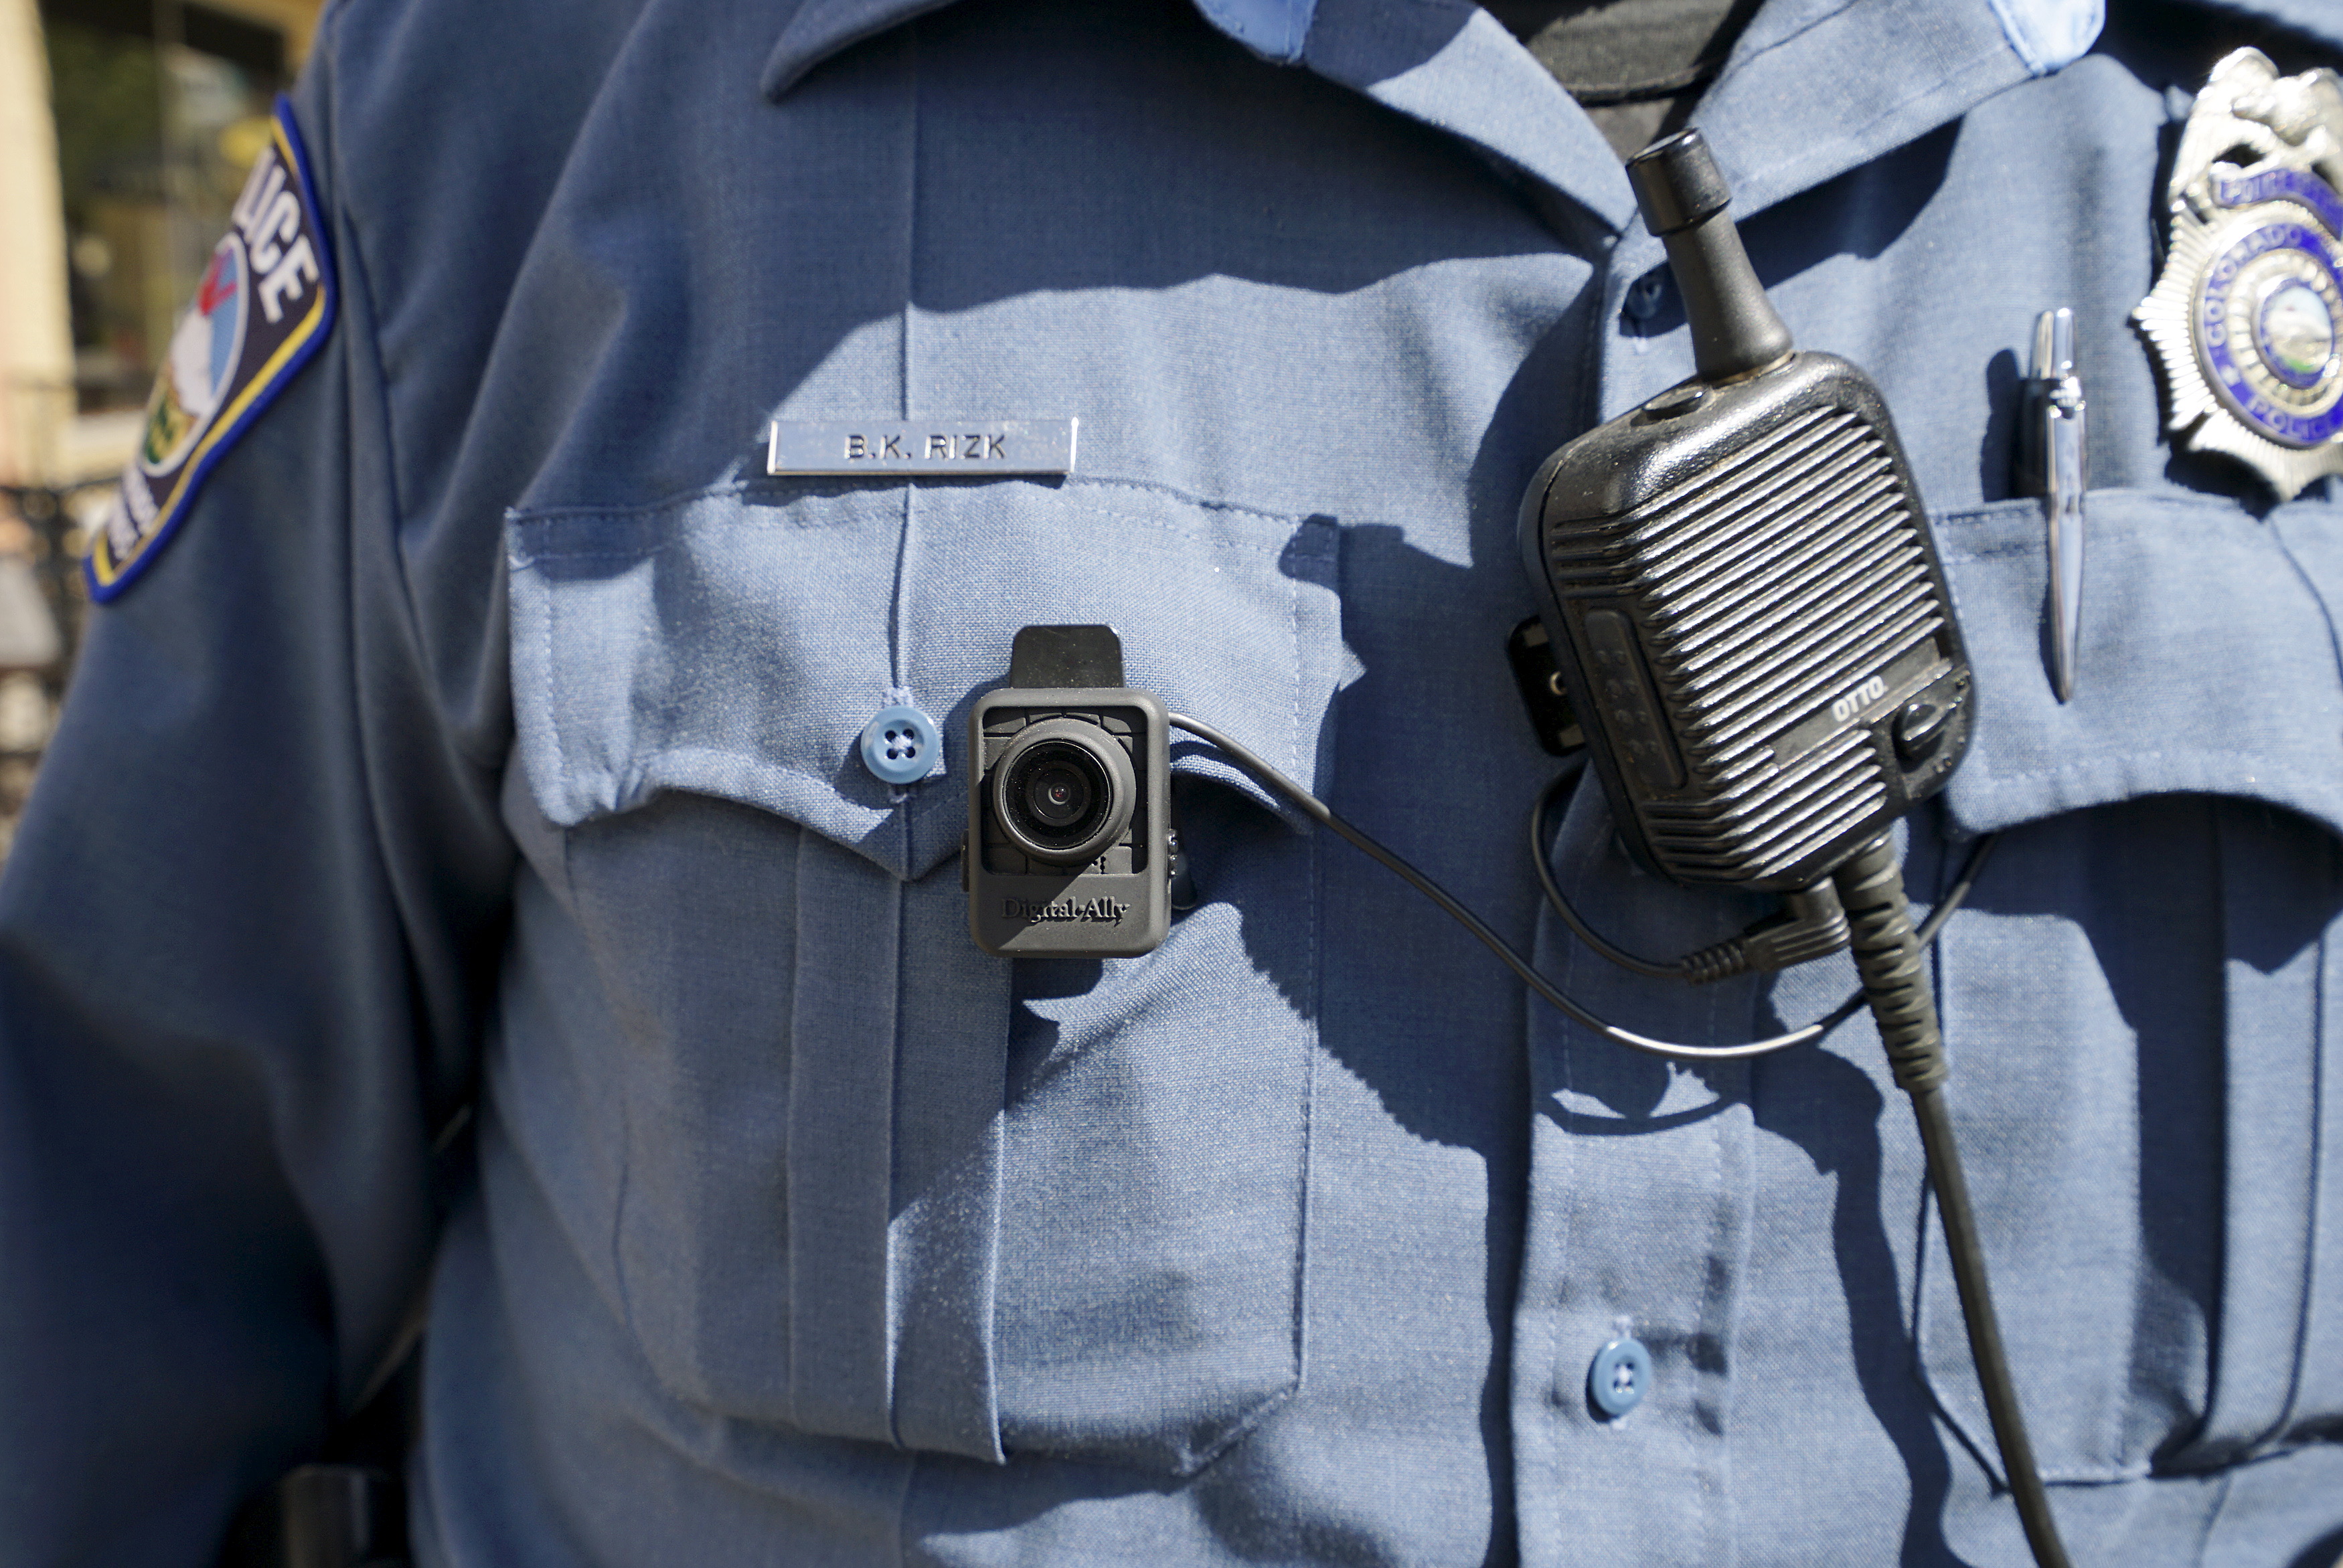 Do body-worn cameras improve police behavior? | Brookings